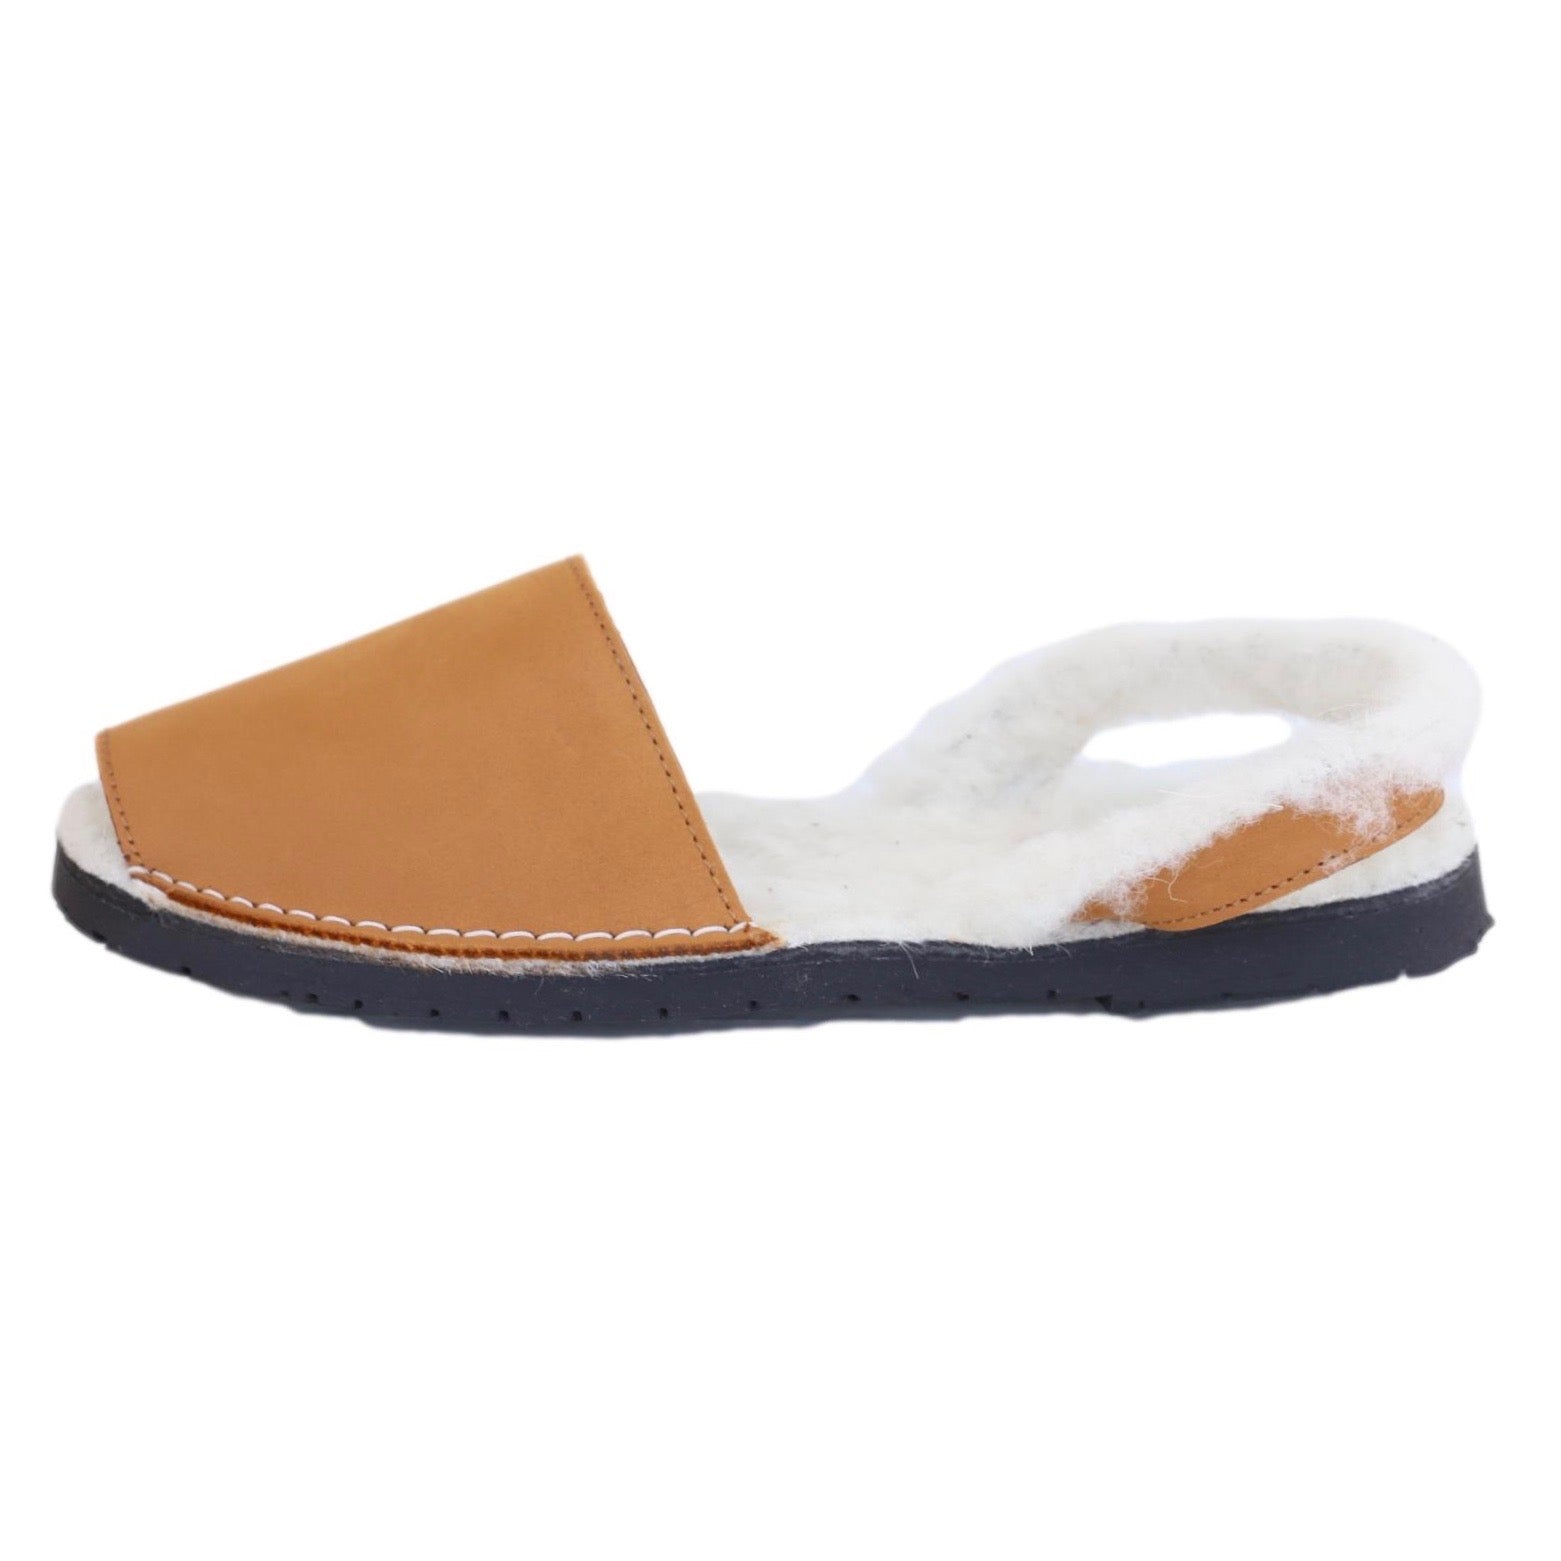 Camel slippers